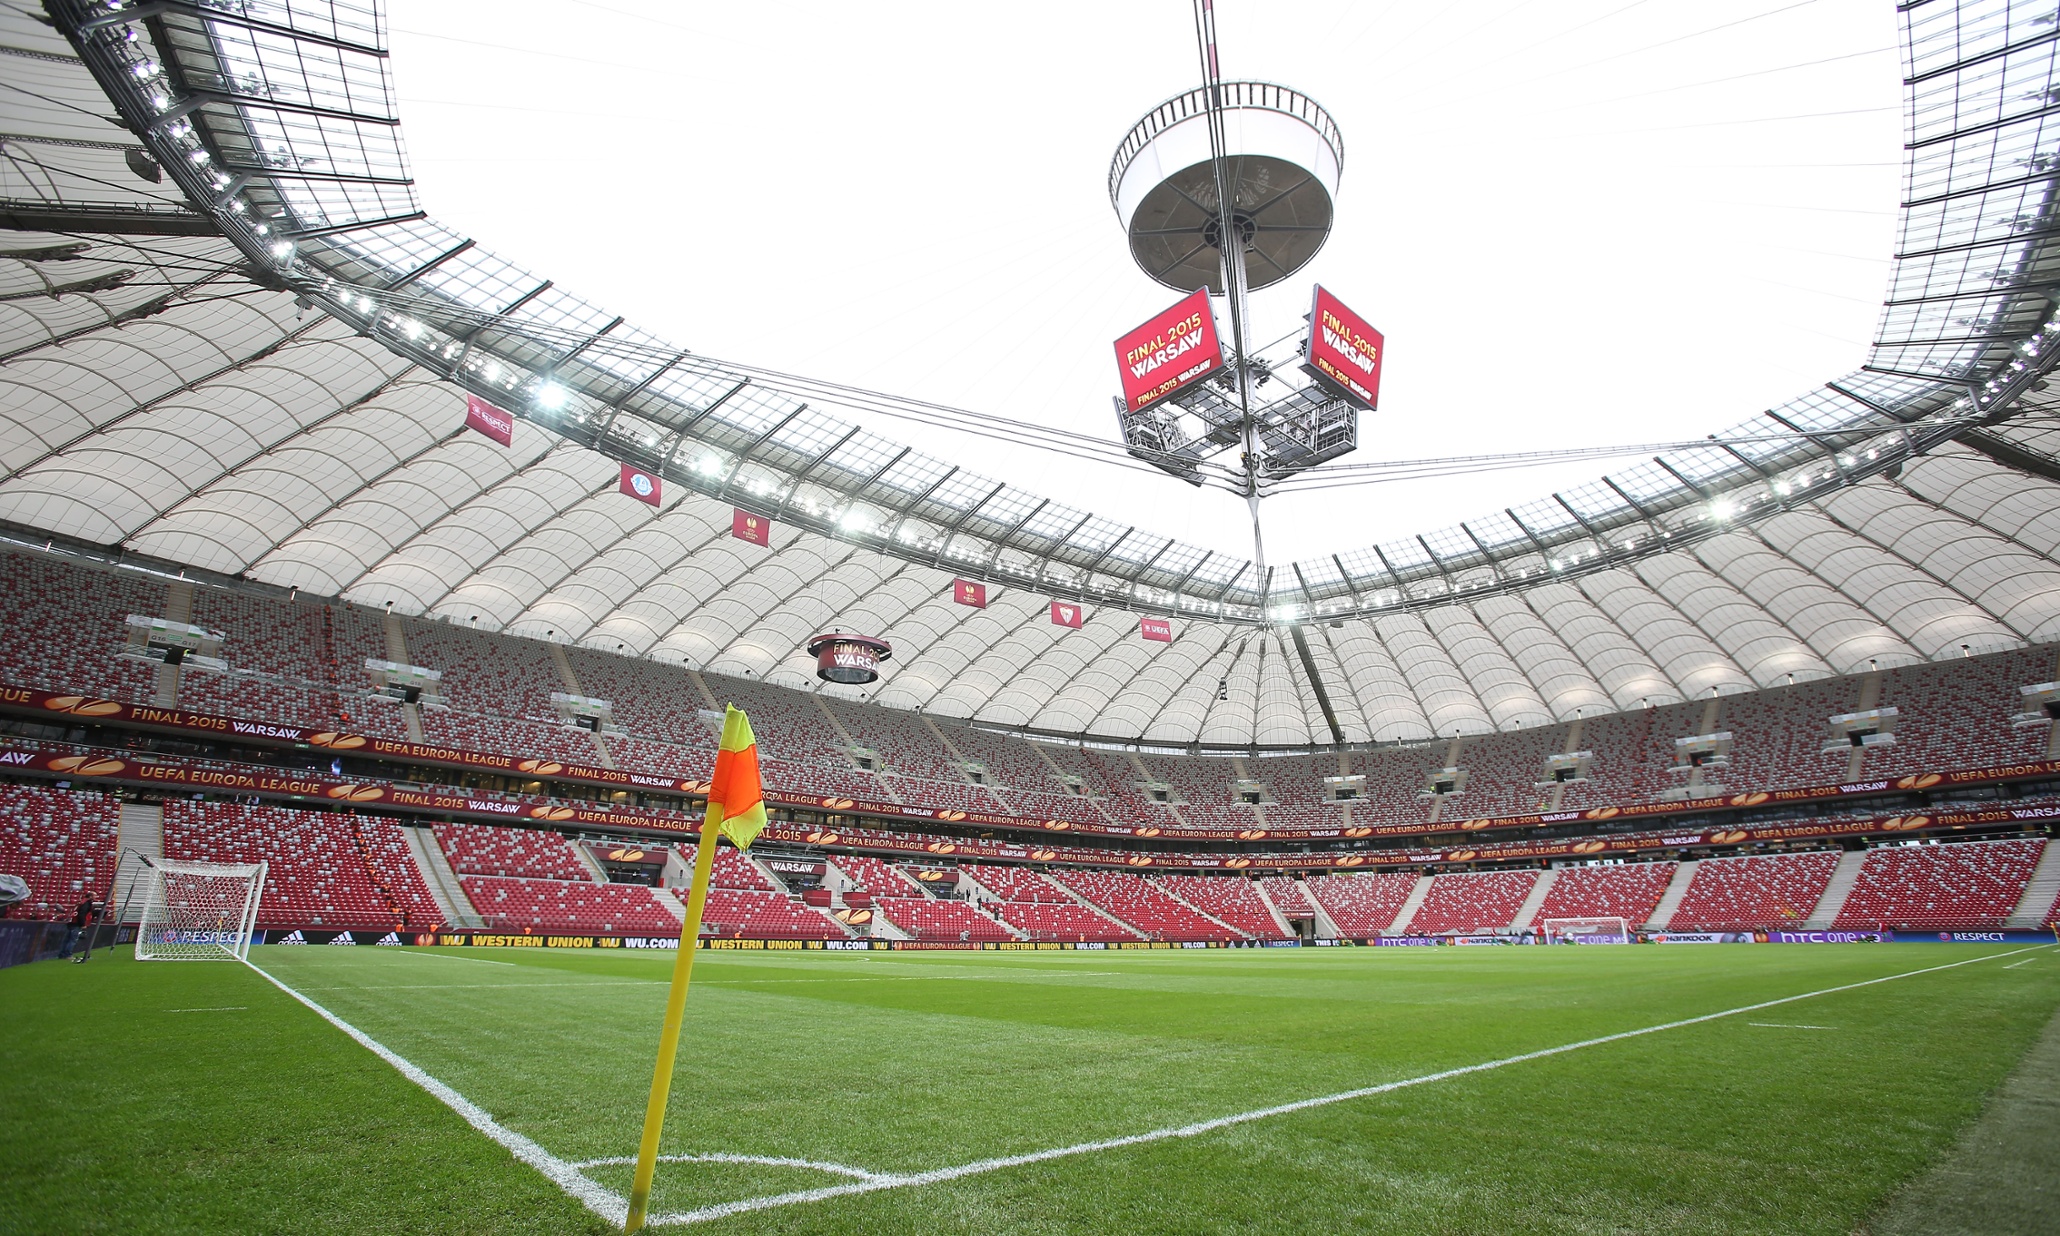 UEFA Europa League 2014/15 Final Dnipro Dnipropetrovsk v Sevilla Narodowy Stadium, Warsaw, Poland - 27 May 2015